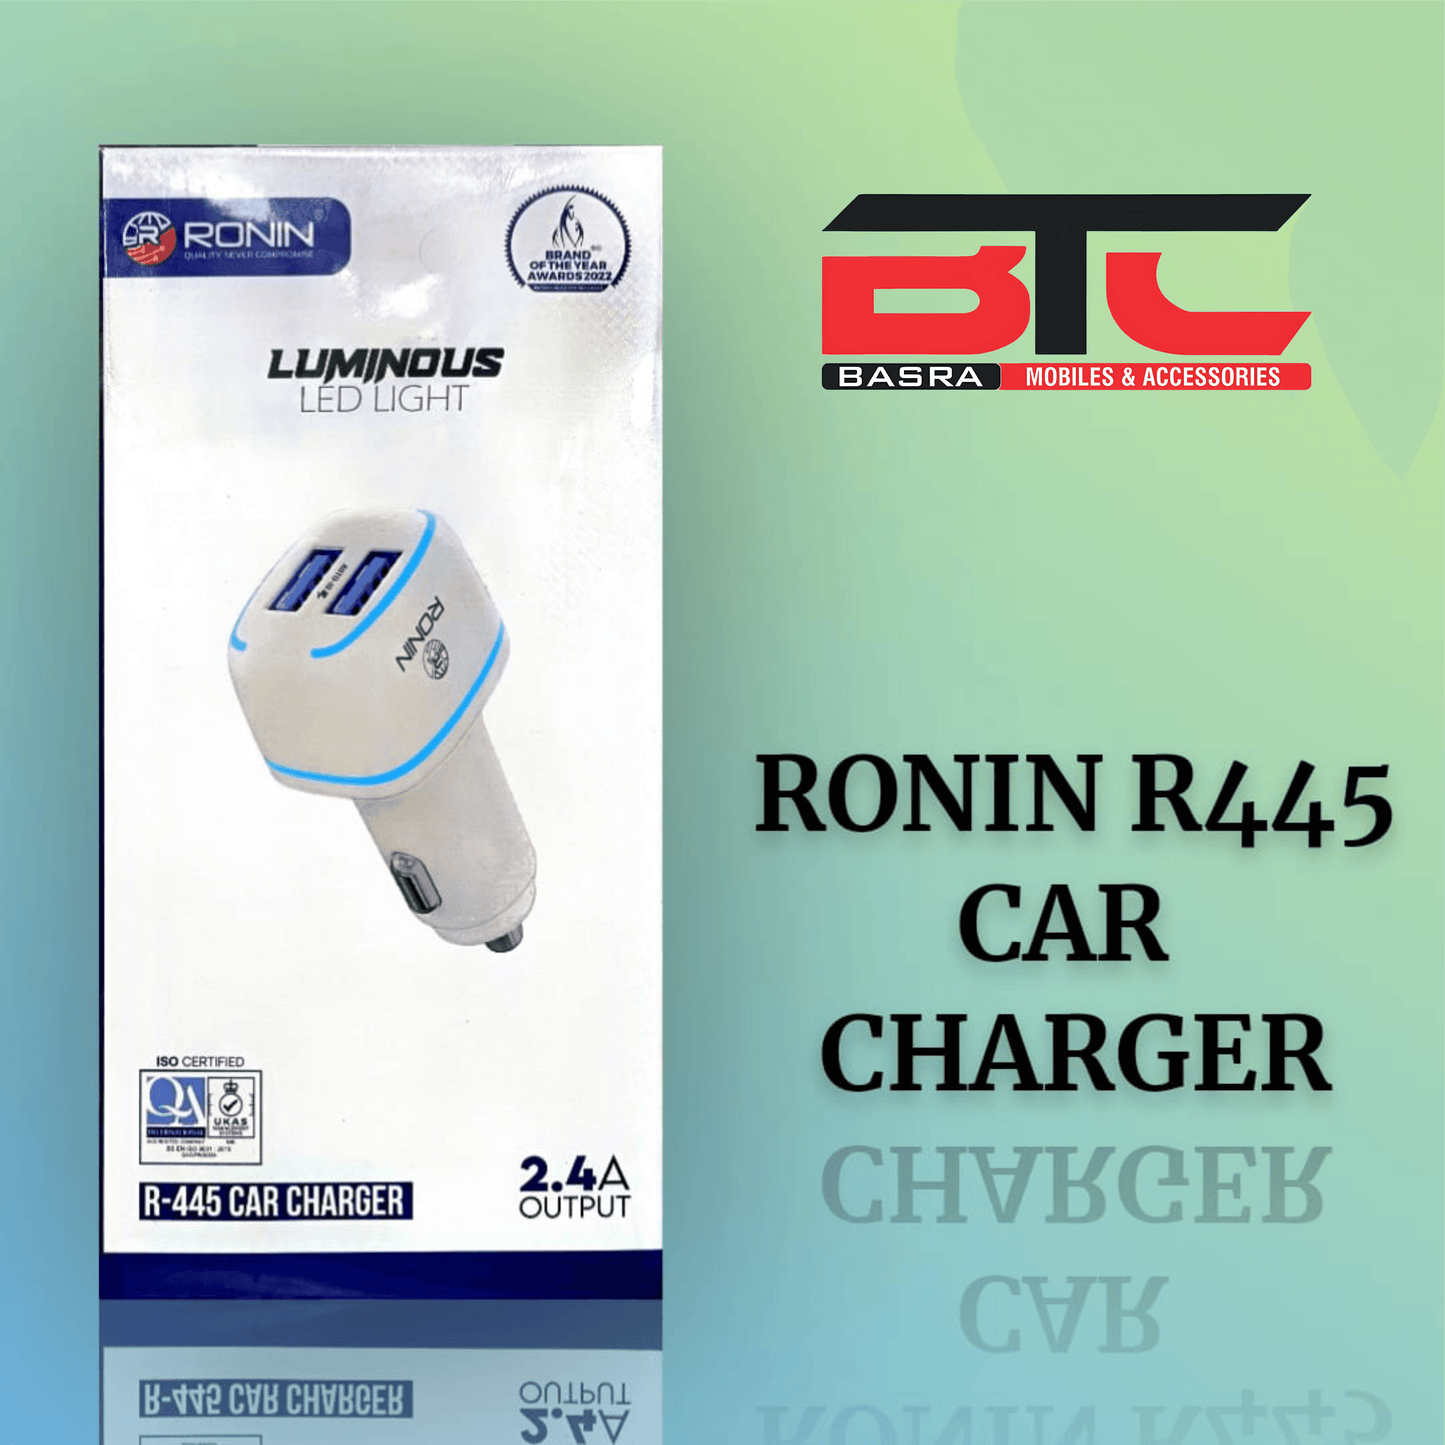 RONIN R445 CAR CHARGER 2.4A - Basra Mobile Center